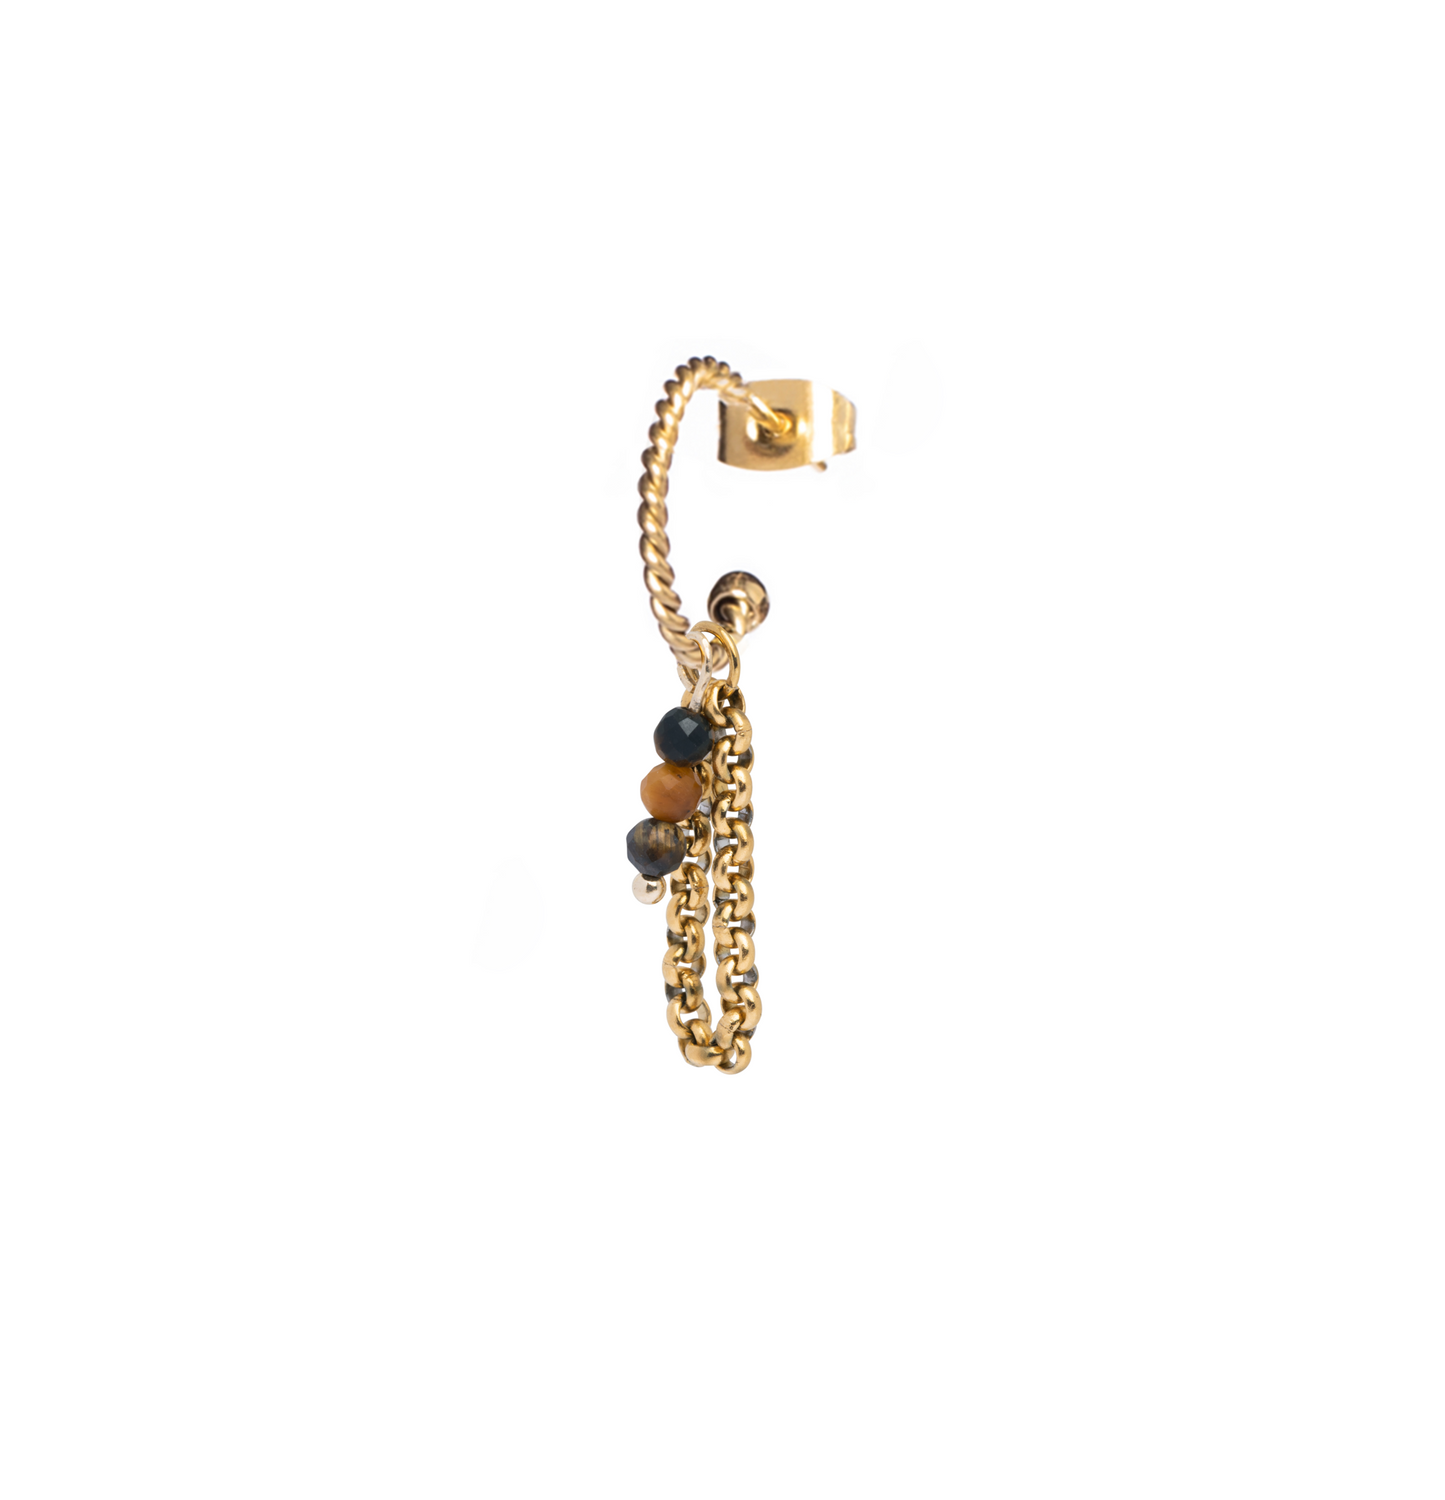 Twisted chain tijgeroog earring